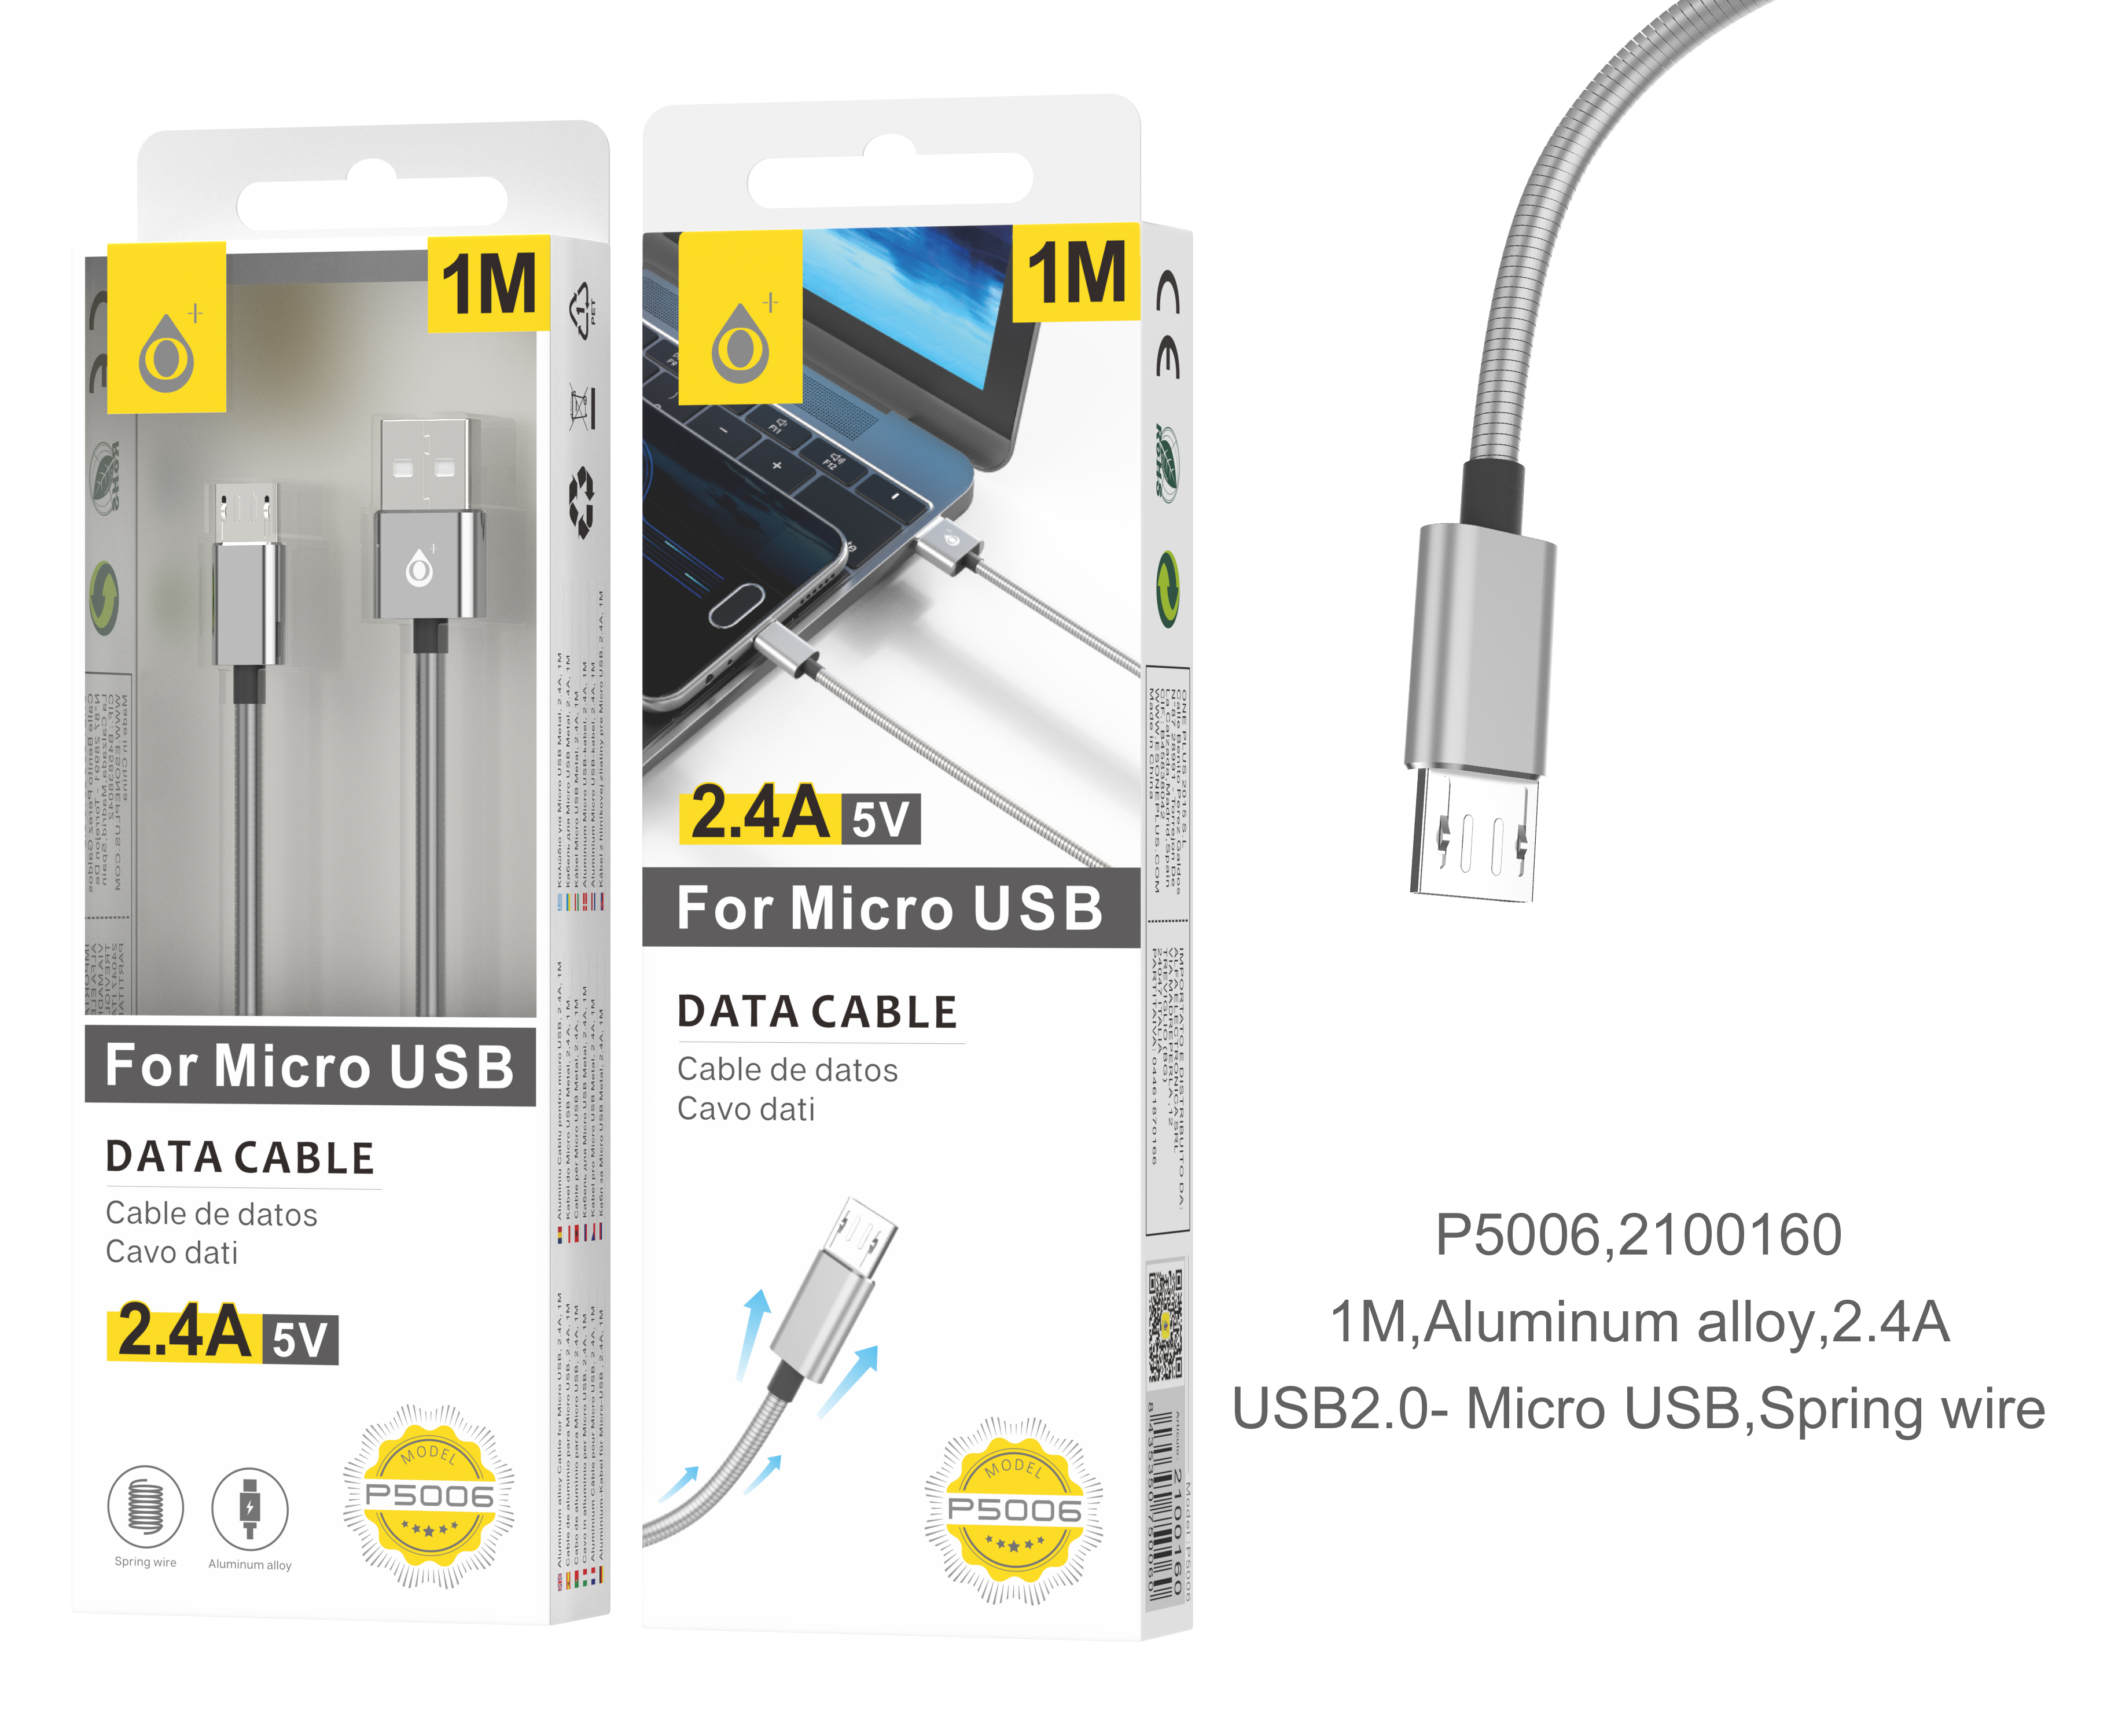 P5006 PL Cable de dato Merga Metalico para MicroUSB Plata, 2A, 1M